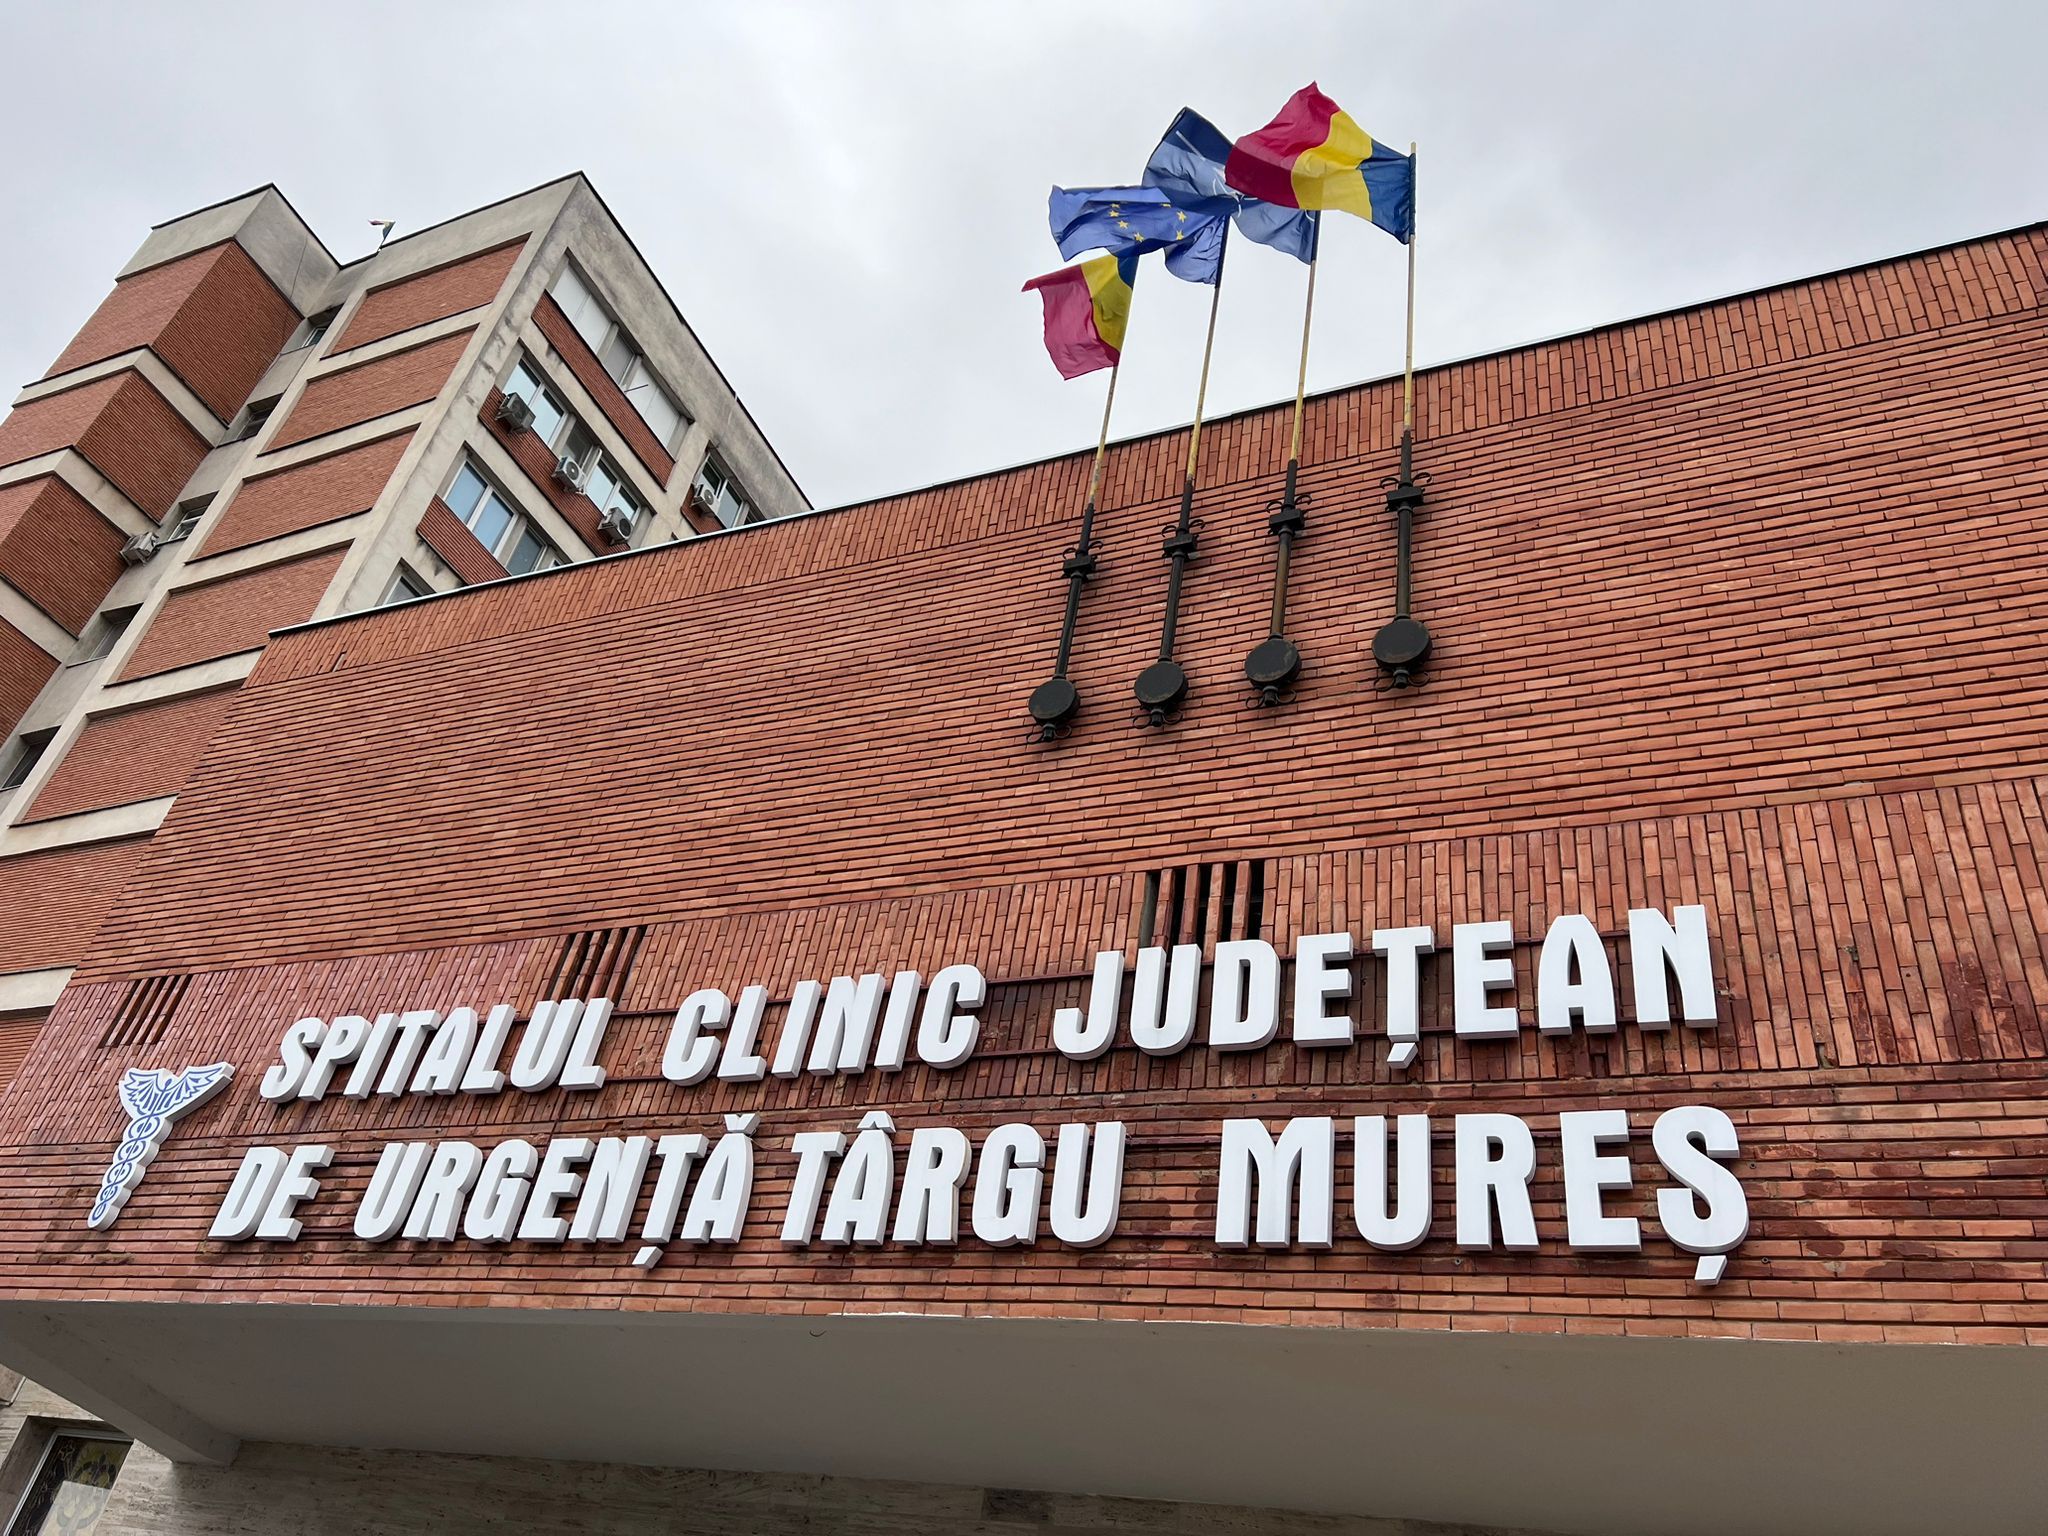 Spitalul Târgul Mureș